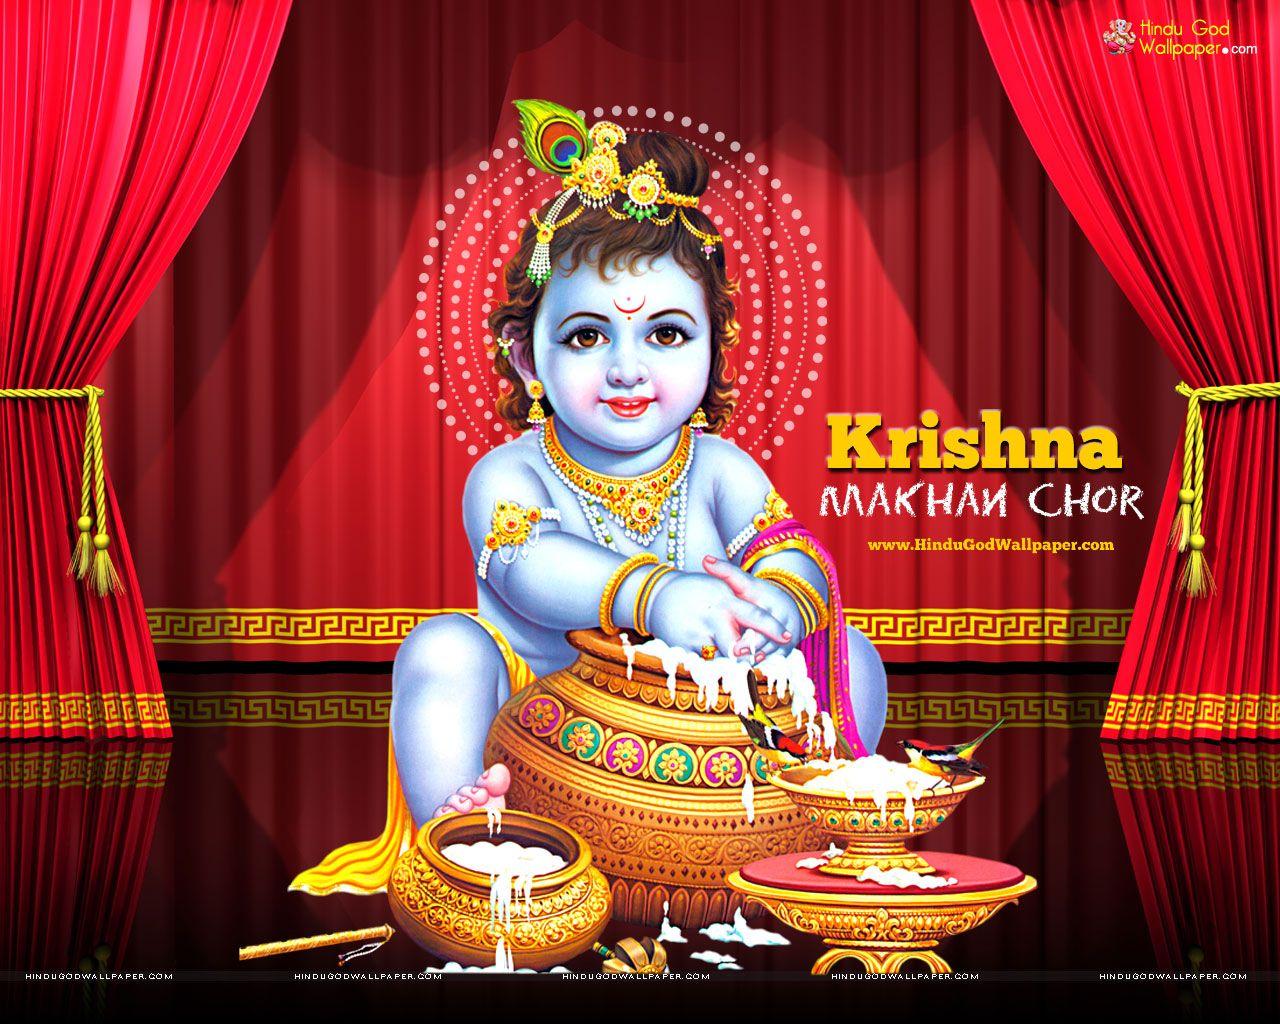 Makhan Chor Krishna Wallpaper & Image Download. Krishna. Krishna